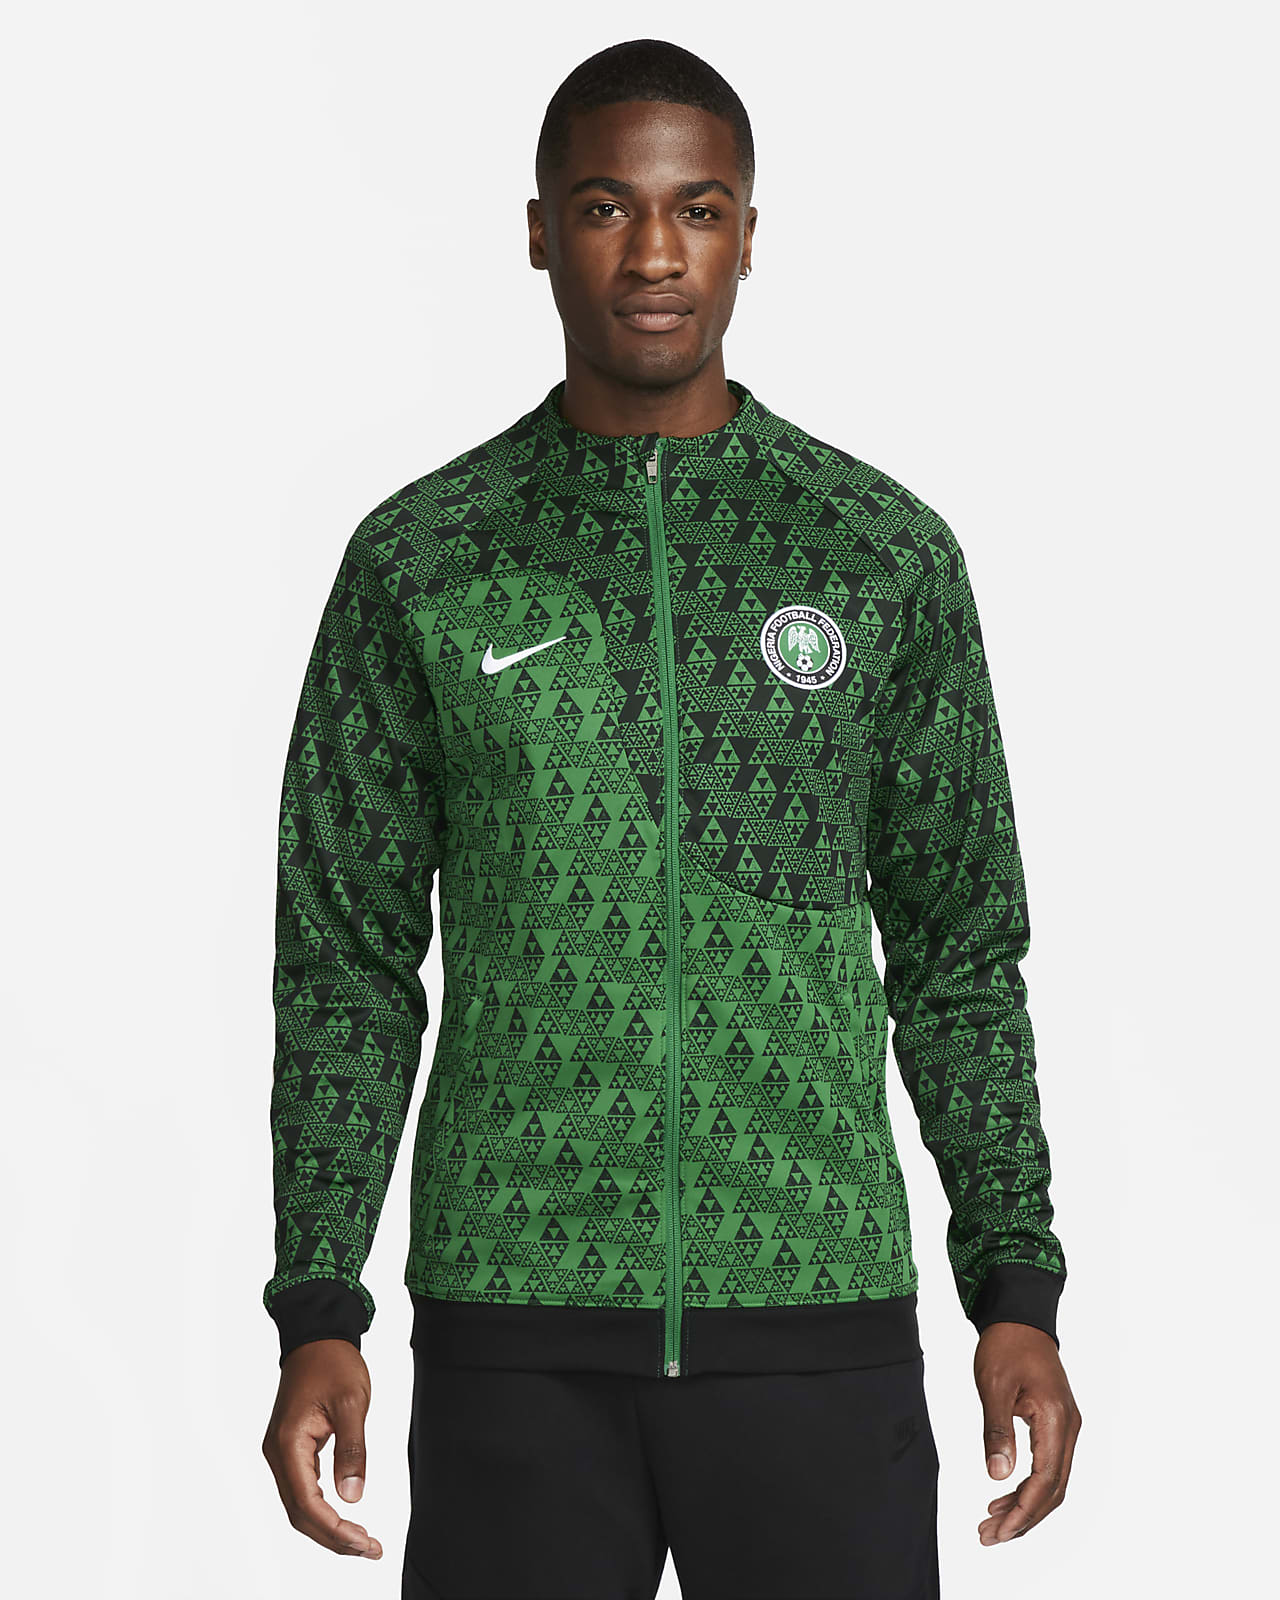 Nigeria Academy Pro Men's Knit Soccer 